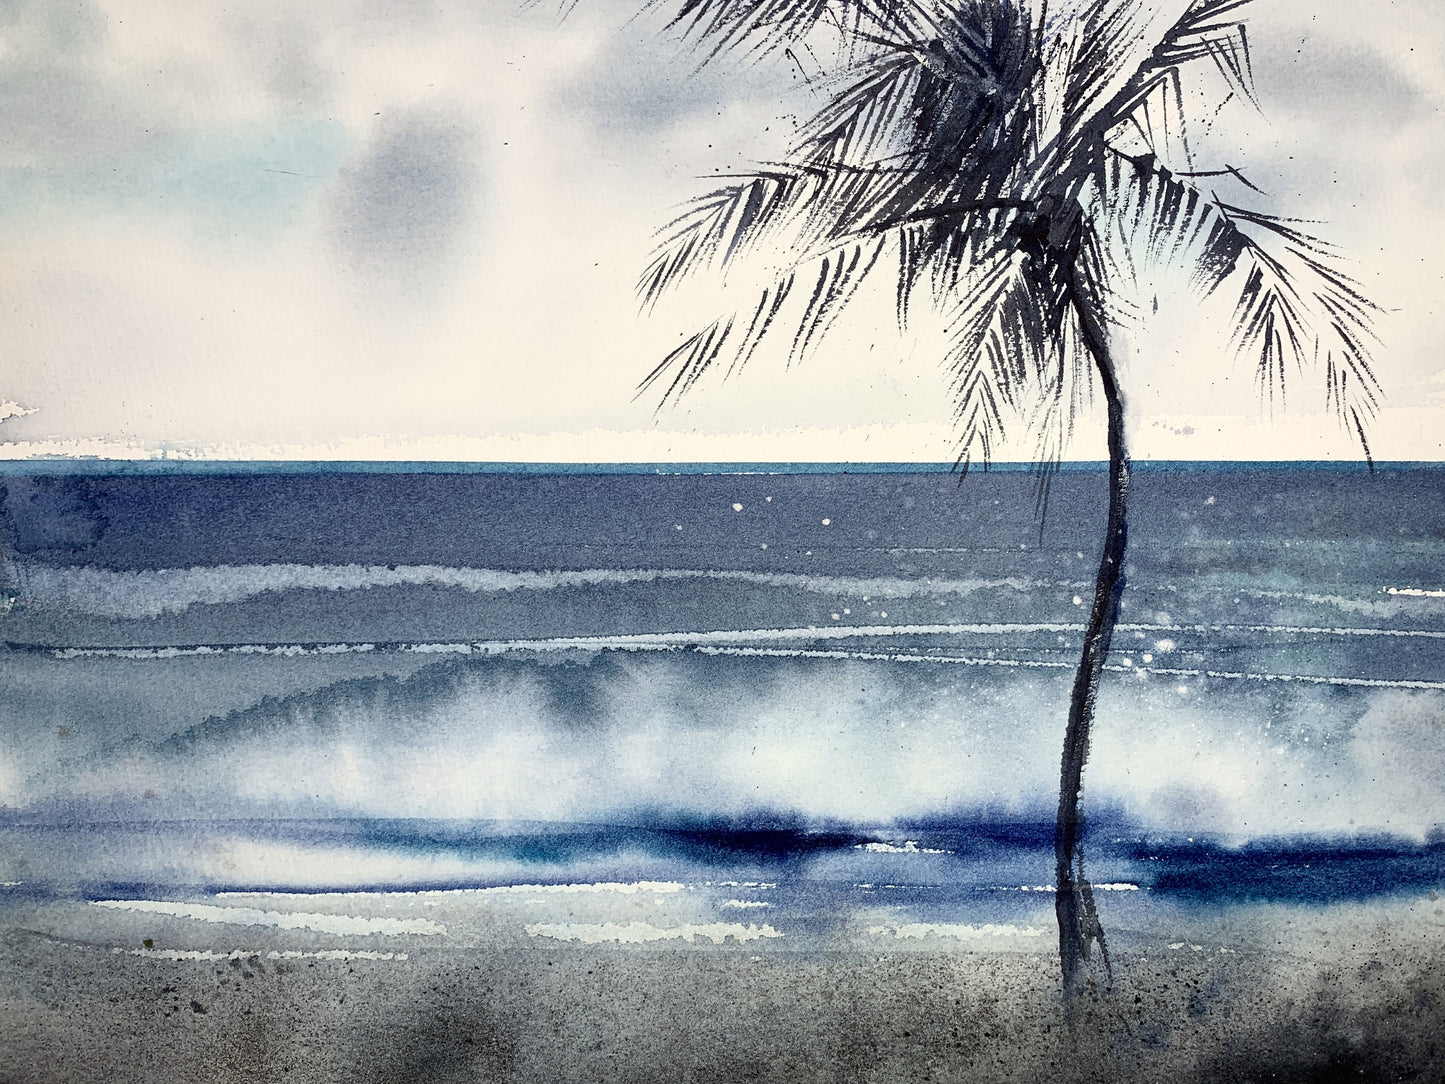 Palm Tree Art Print, Modern Wall Decor, Watercolor Sea Painting, Beach Canvas Prints, Ocean Wave Contemporary Art